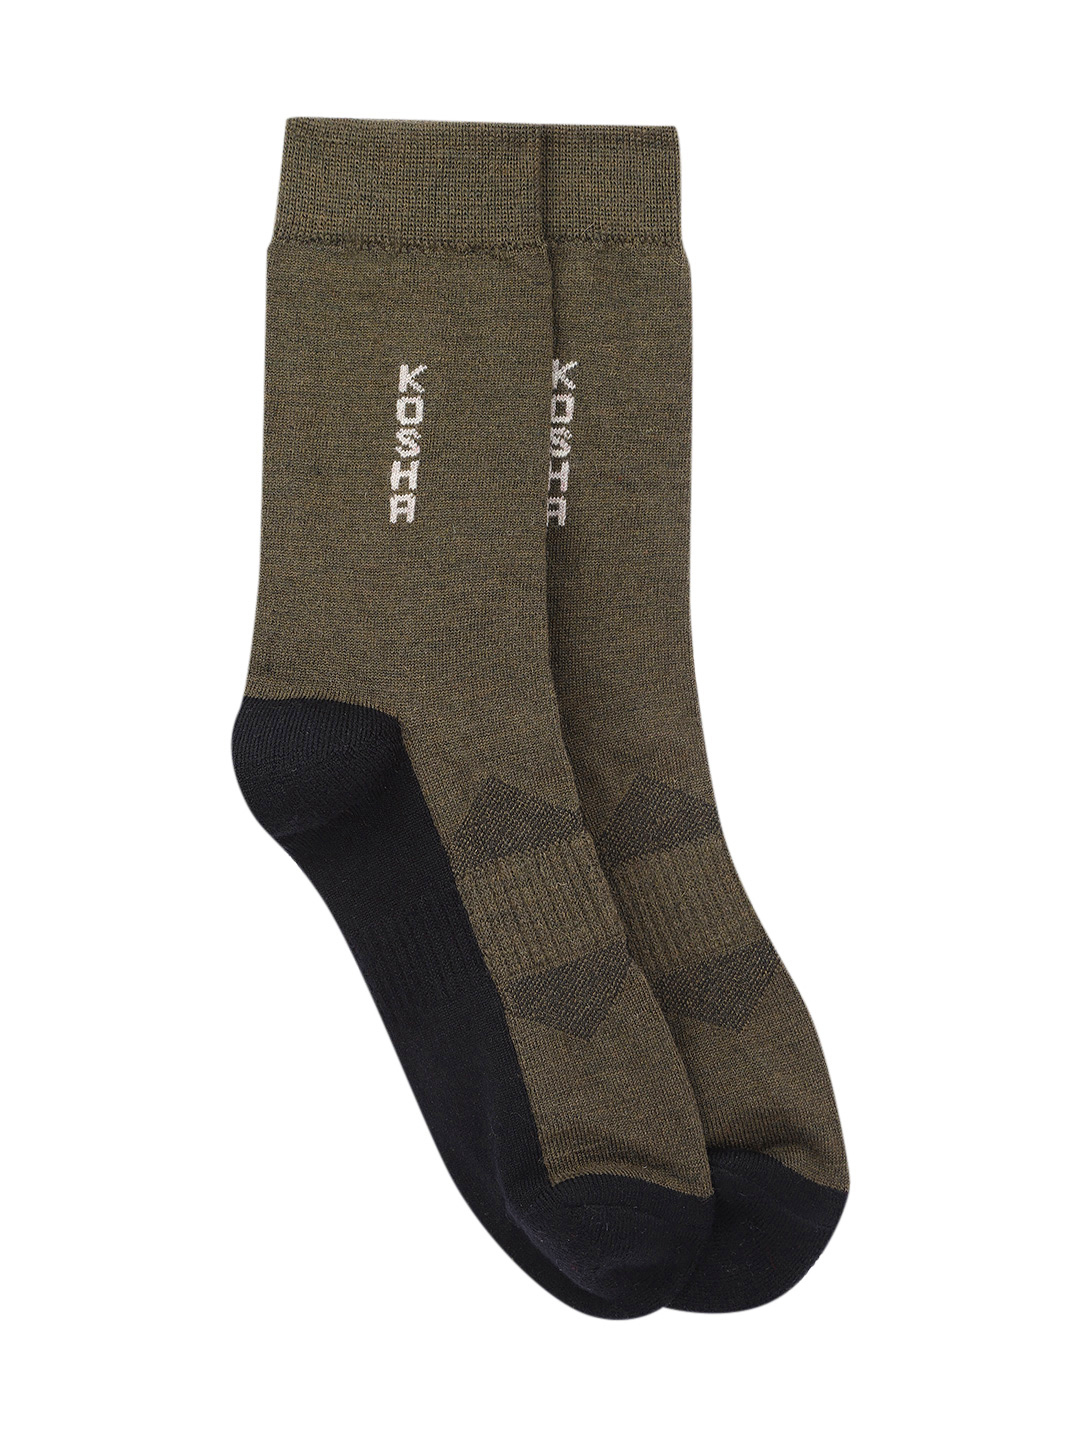 Cushioned Merino Wool Olive-Black Regular Socks | Men